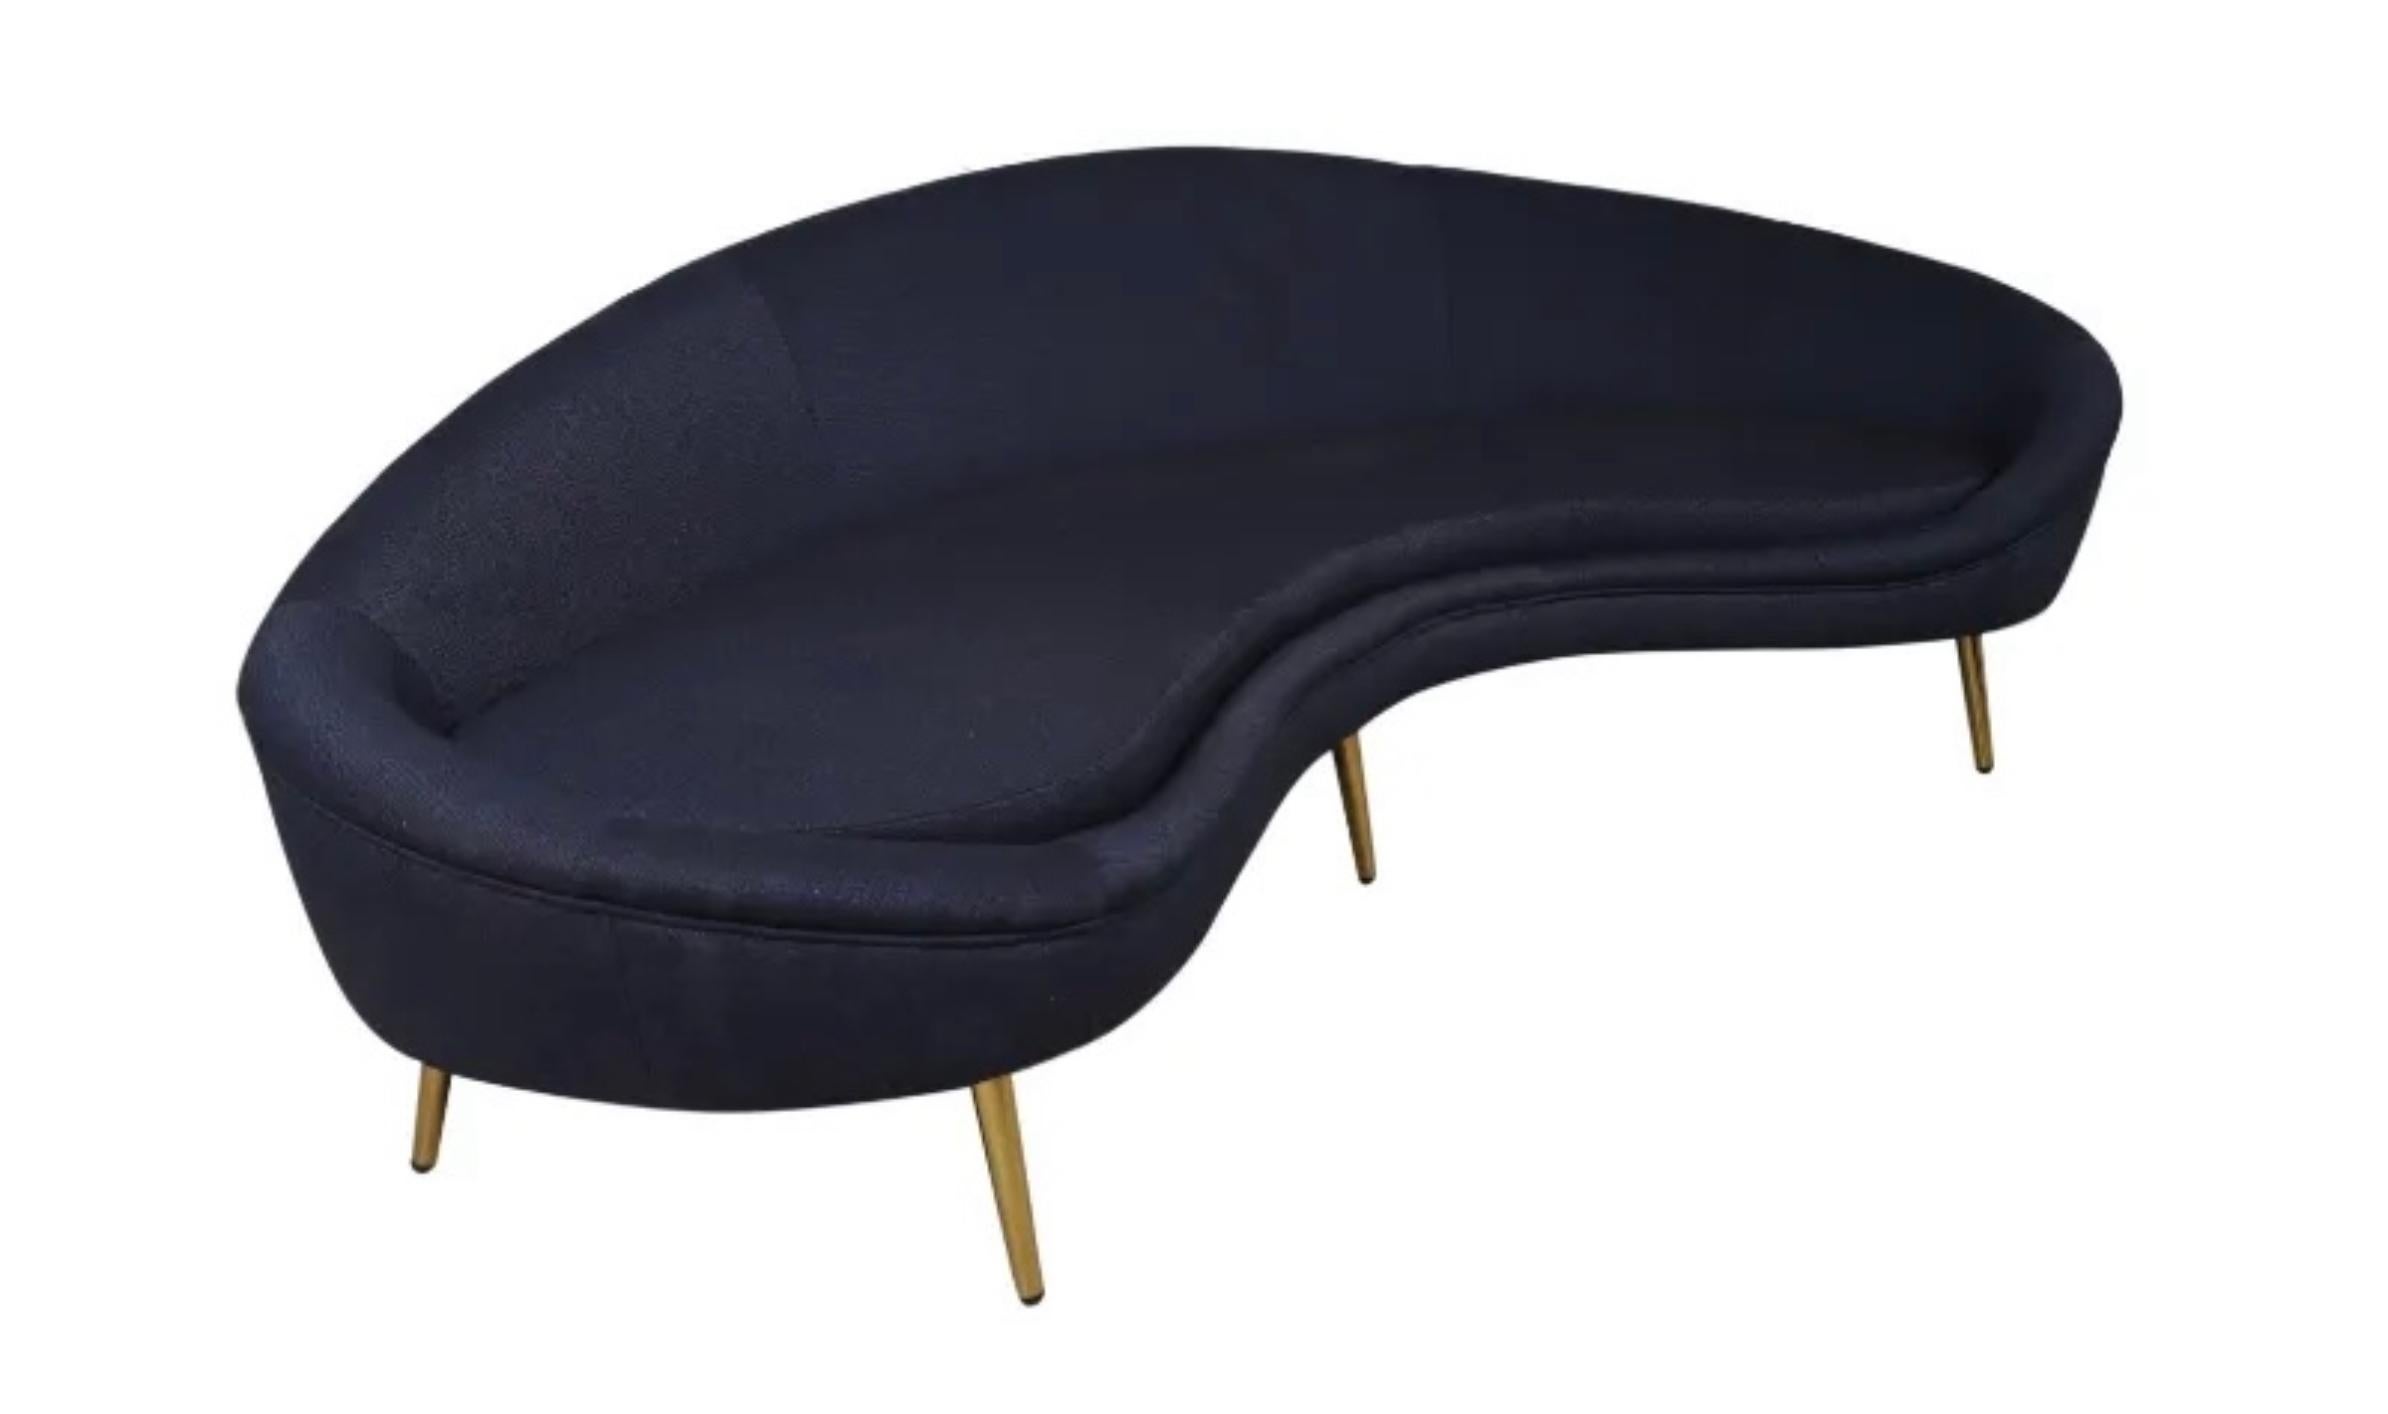 Ico Parisi style freeform sofa.

Measures: 31